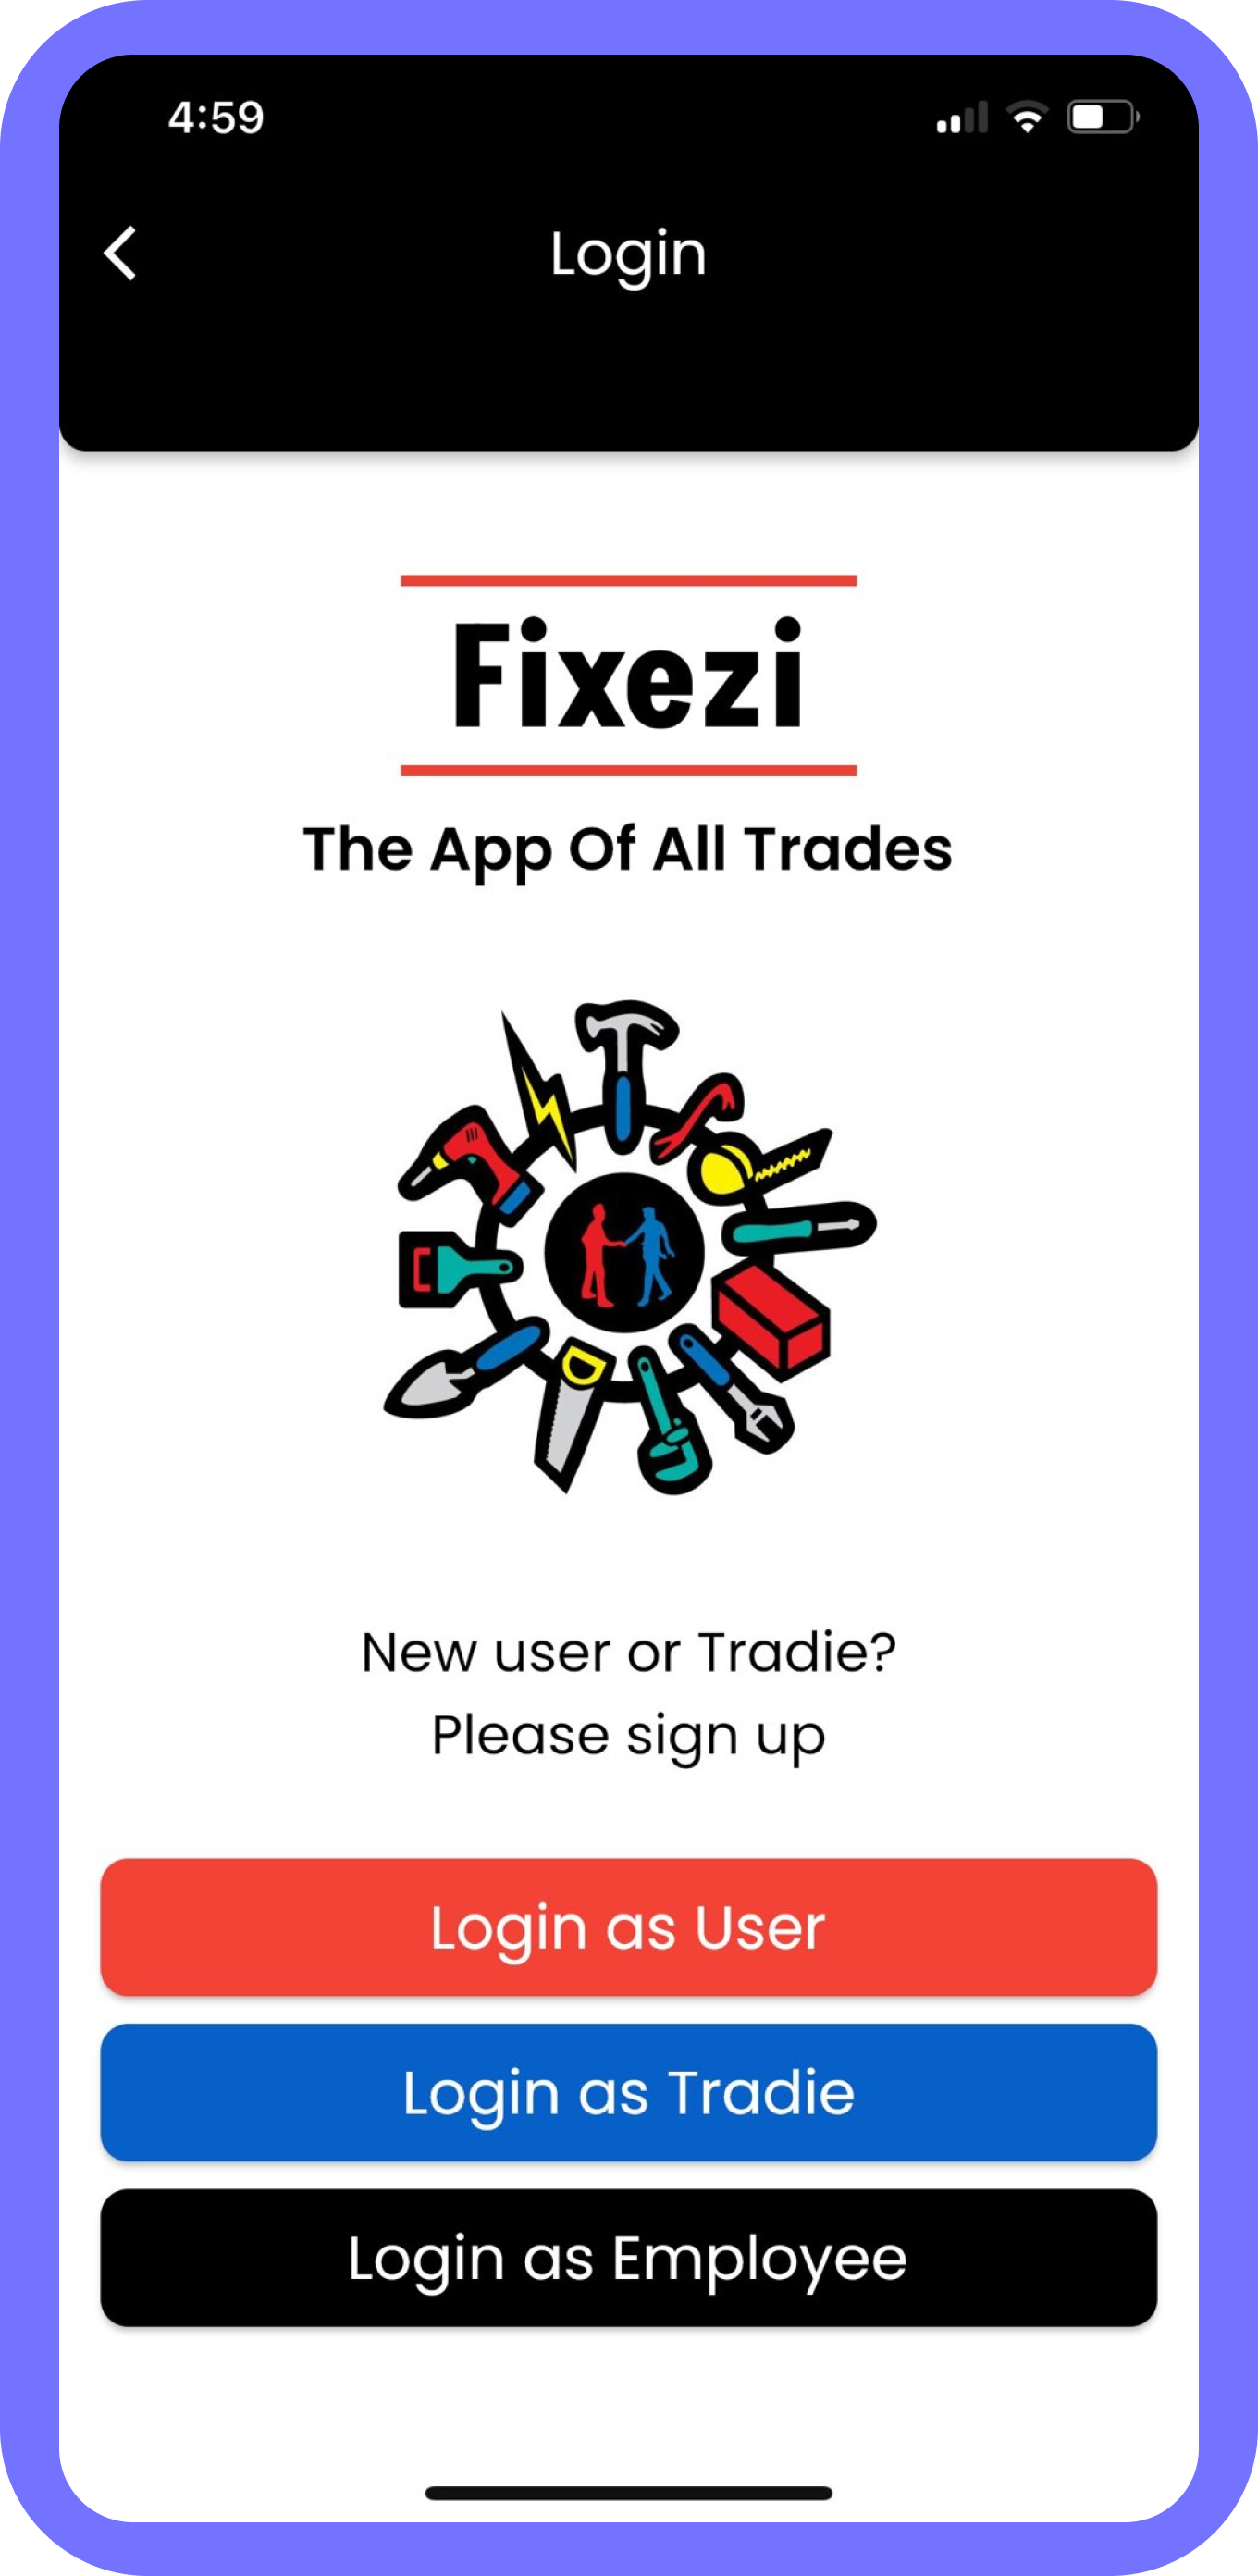 Fixezi-The App o All Trades login  screen for user login, tradie login, employee login.